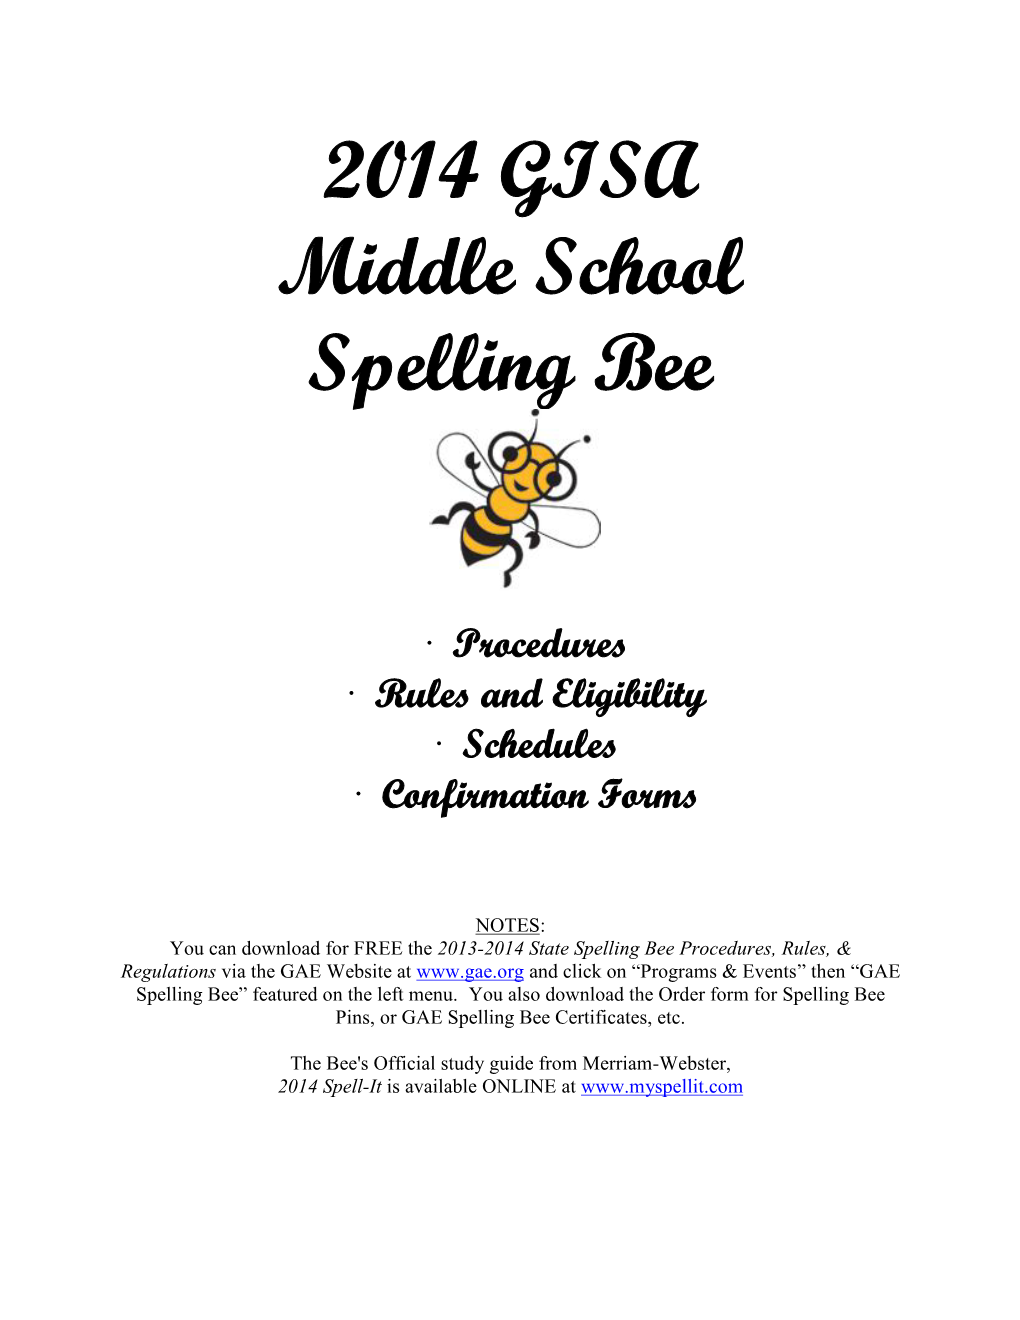 2014 GISA Middle School Spelling Bee